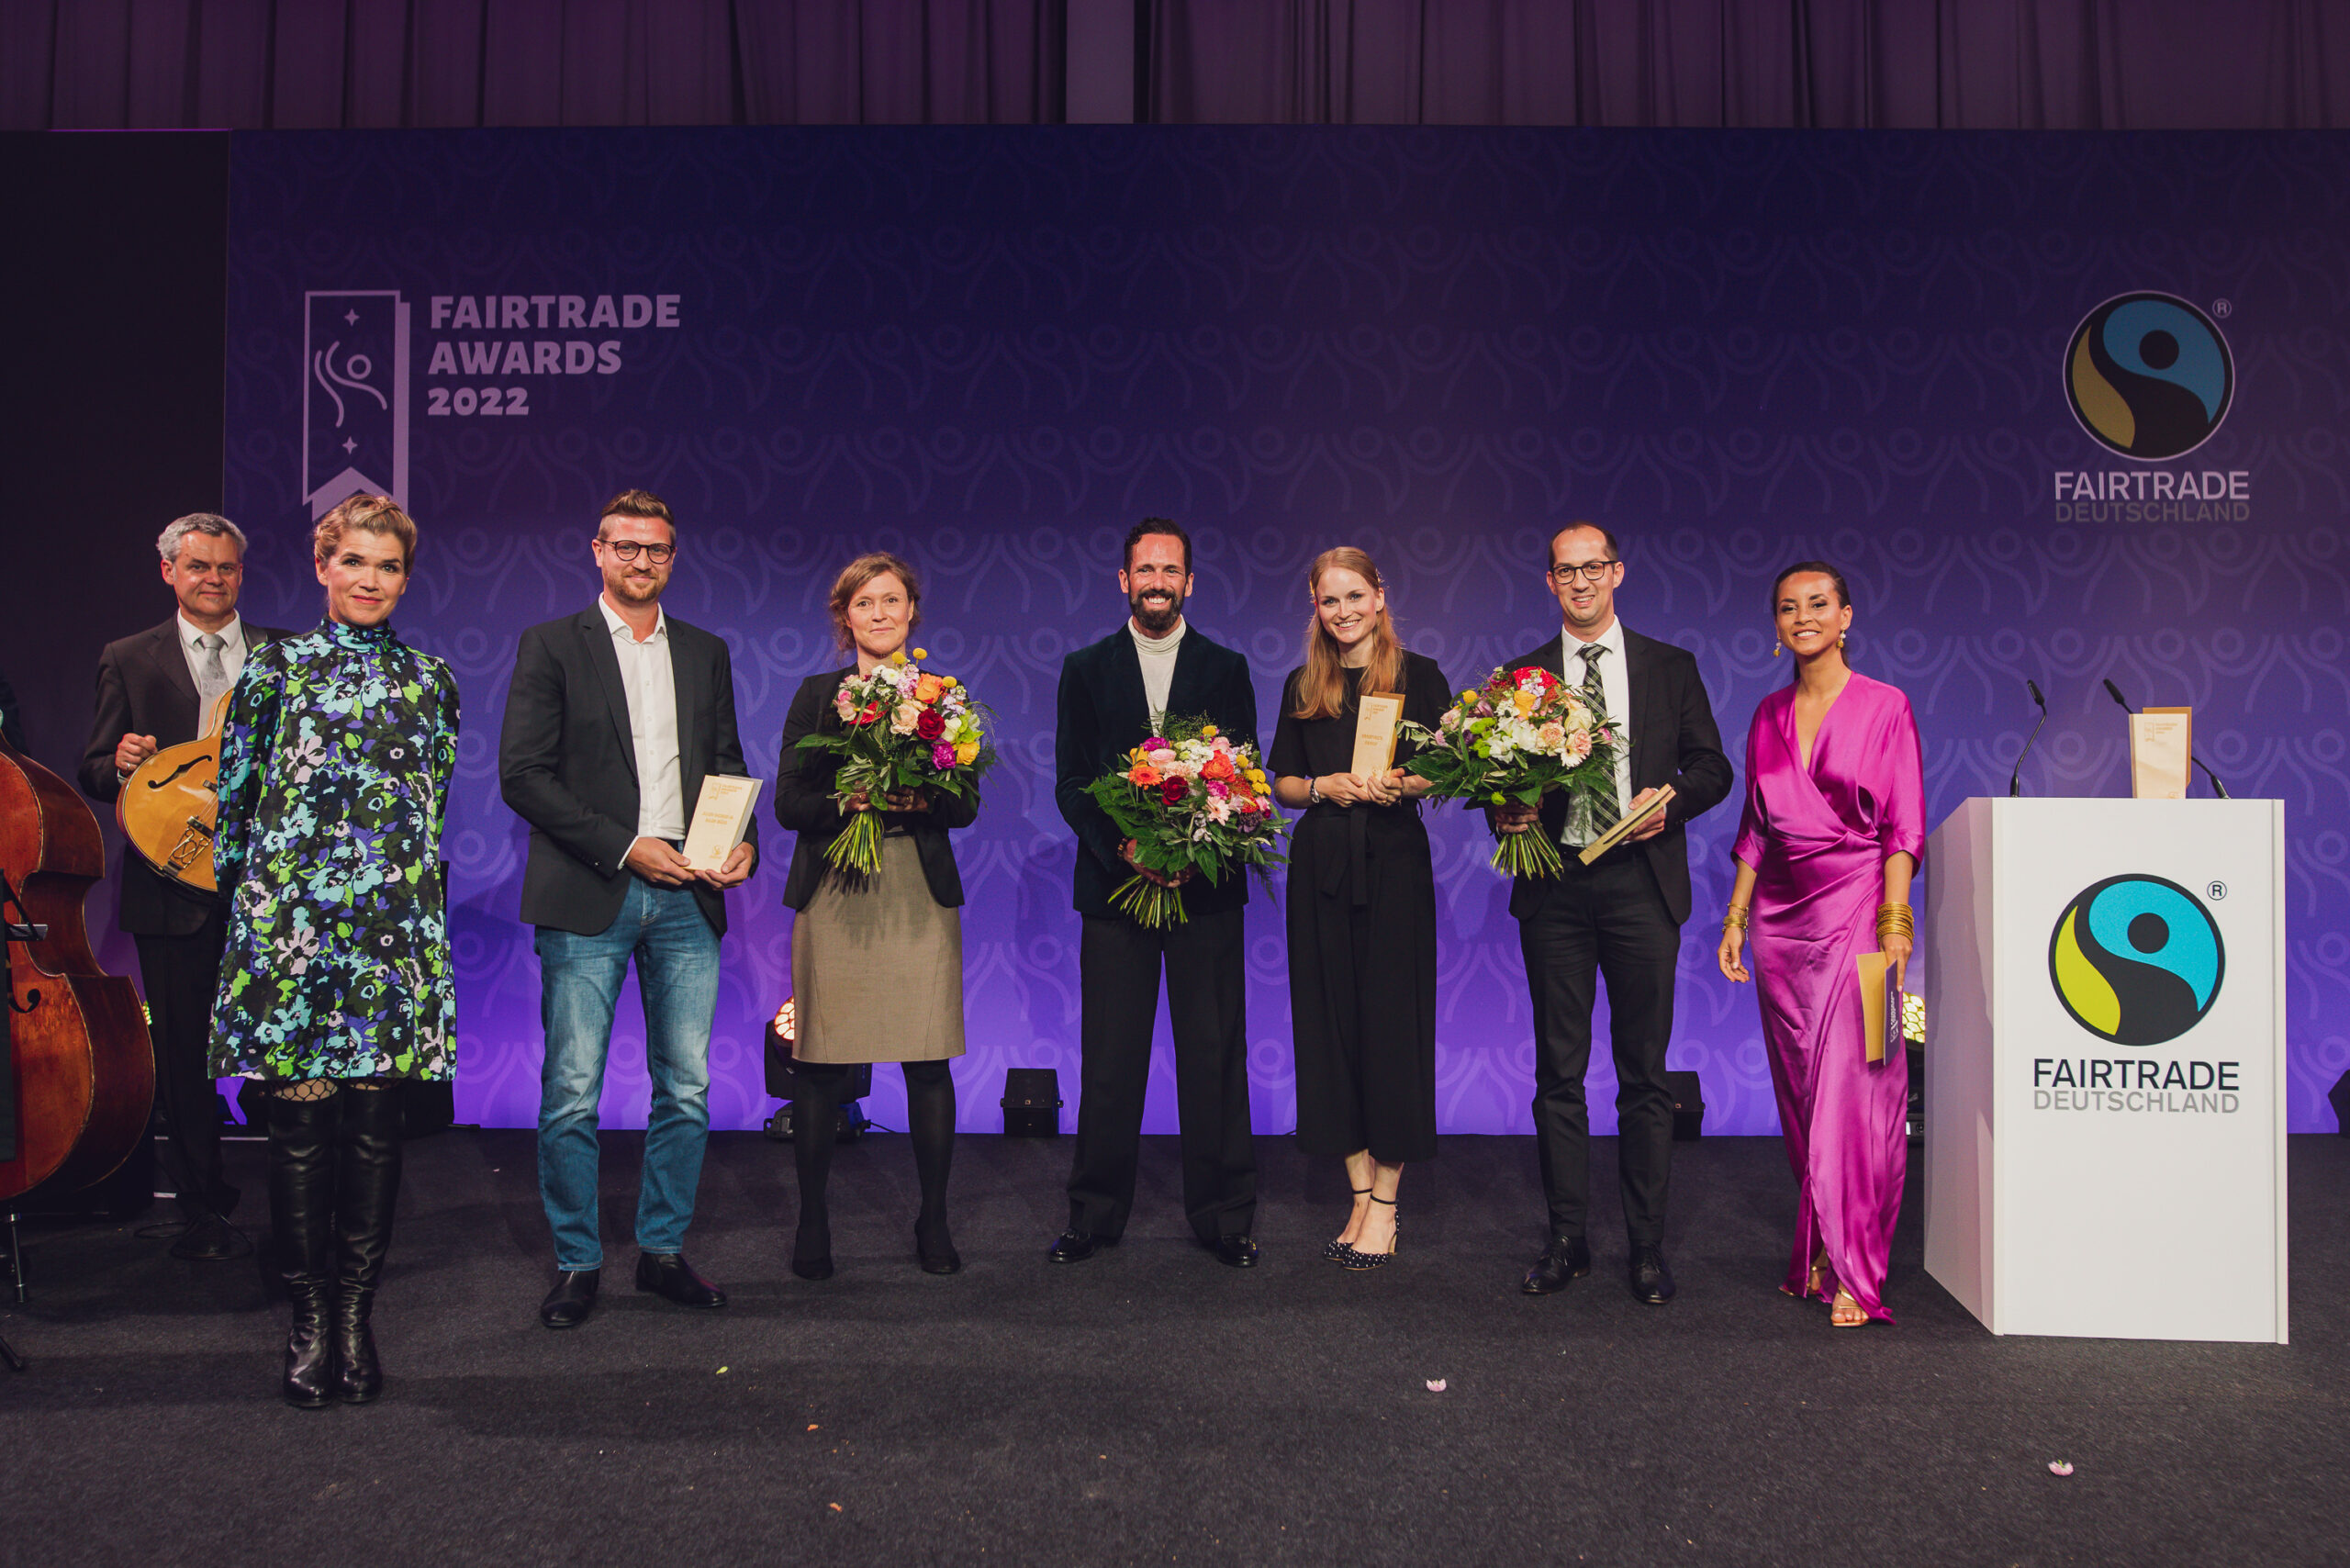 Fairtrade Awards 2022 in Berlin